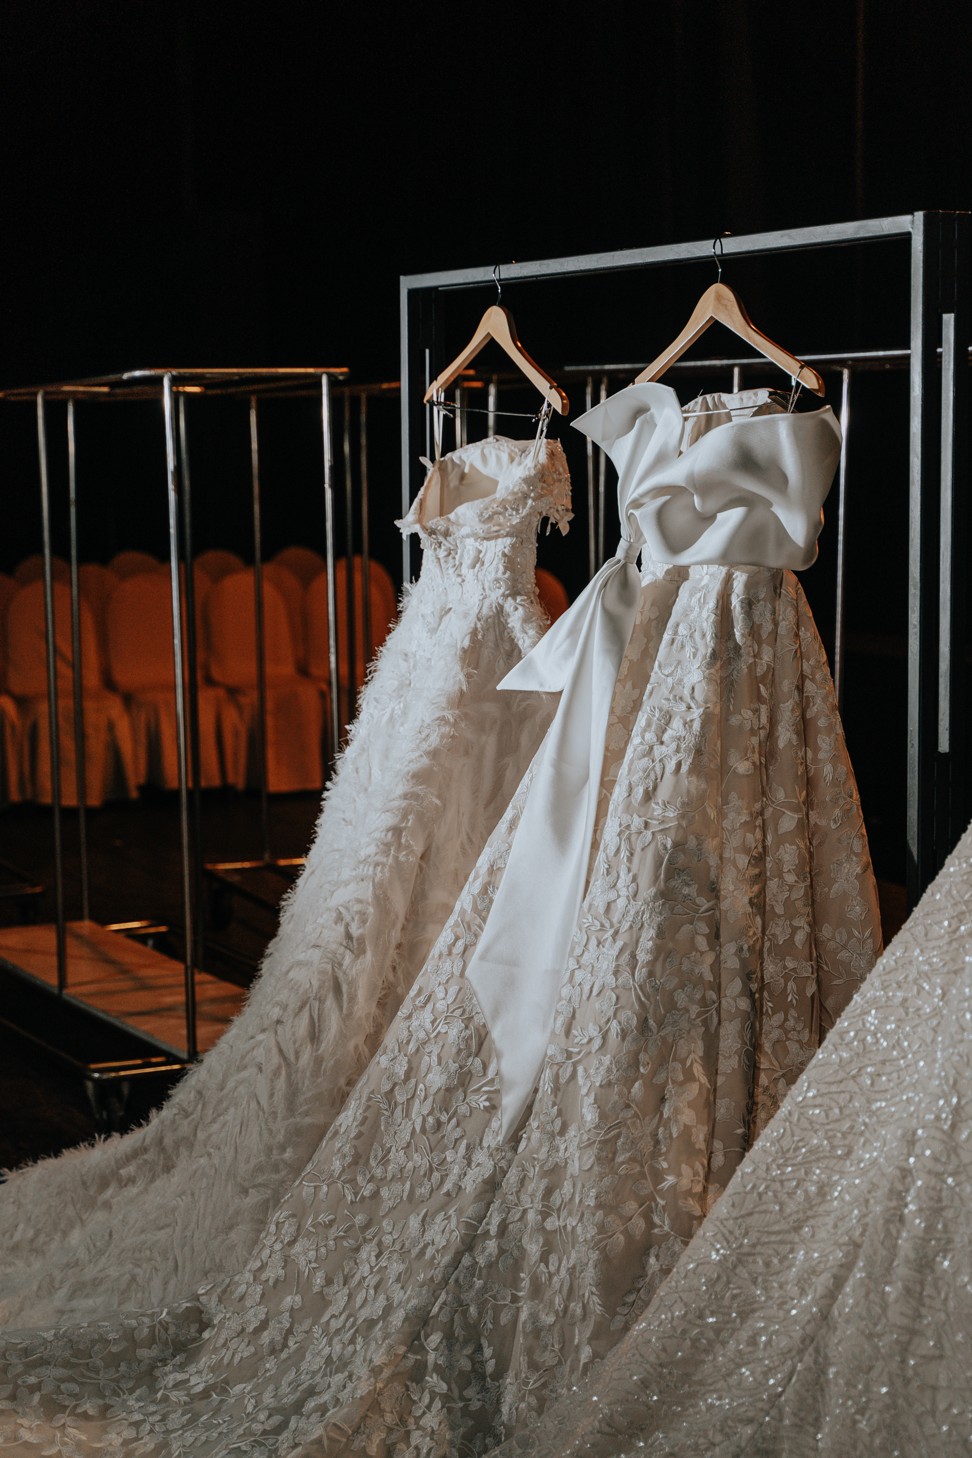 Rosenthal Tee’s elegant bridal gowns. Photo: Oly Ruiz